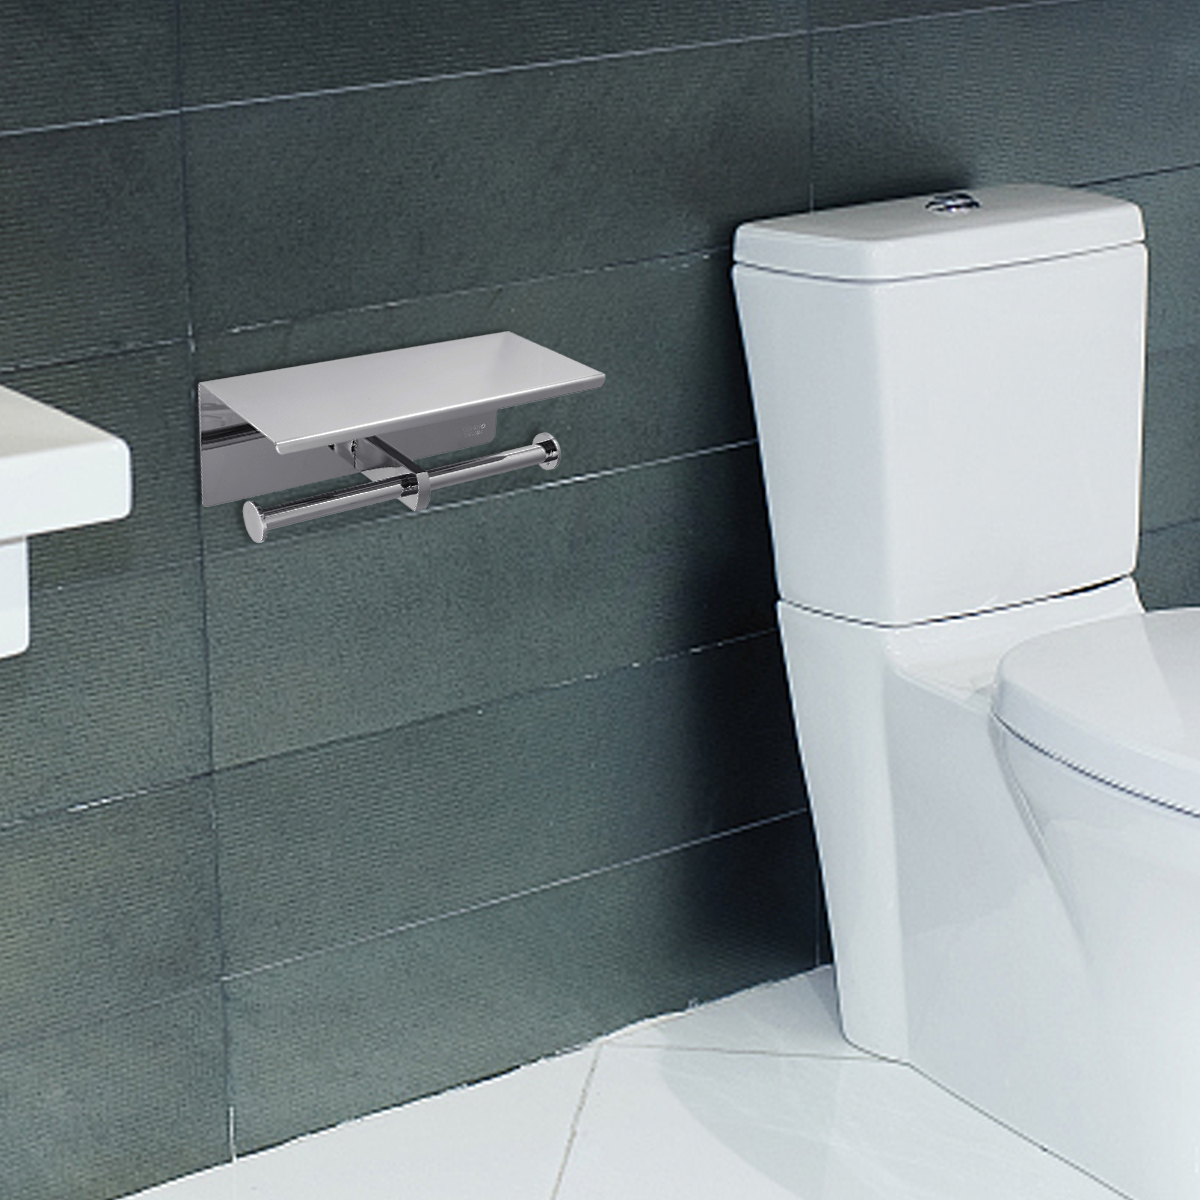 Stainless-Steel-Toilet-Paper-Double-Roll-Holder-Bathroom-Wall-Mount-Paper-Shelf-Holder-Home-1523904-6